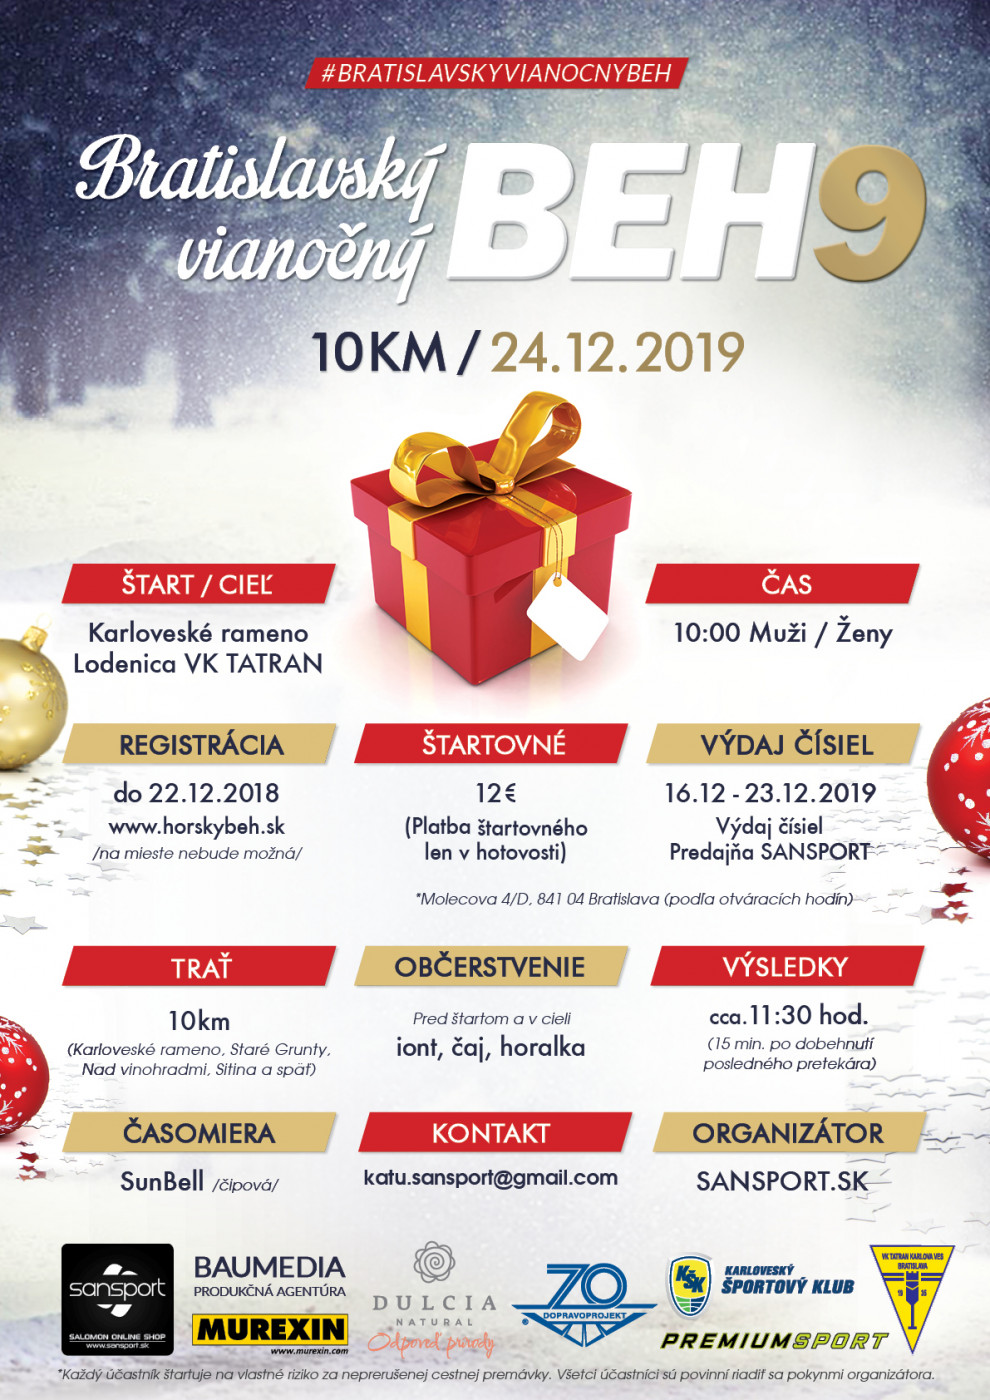 Bratislavsky vianocny beh Sansport - propozicie